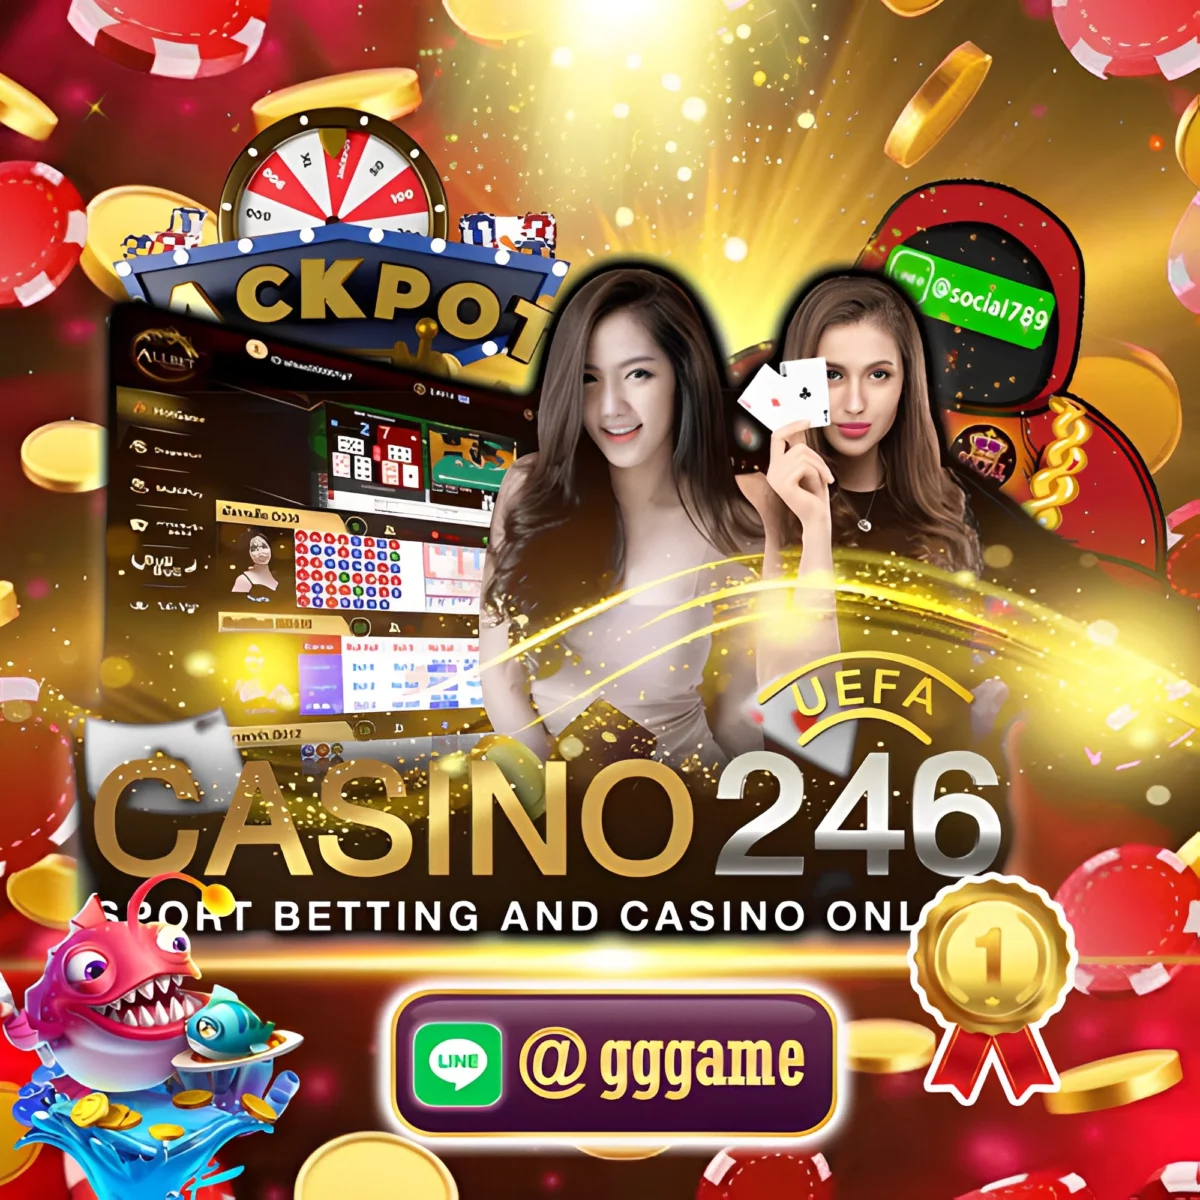 Casino246 สมัครเปิด Member คาสิ โน ออนไลน์ ง่าย ๆ เล่นแล้วรวย